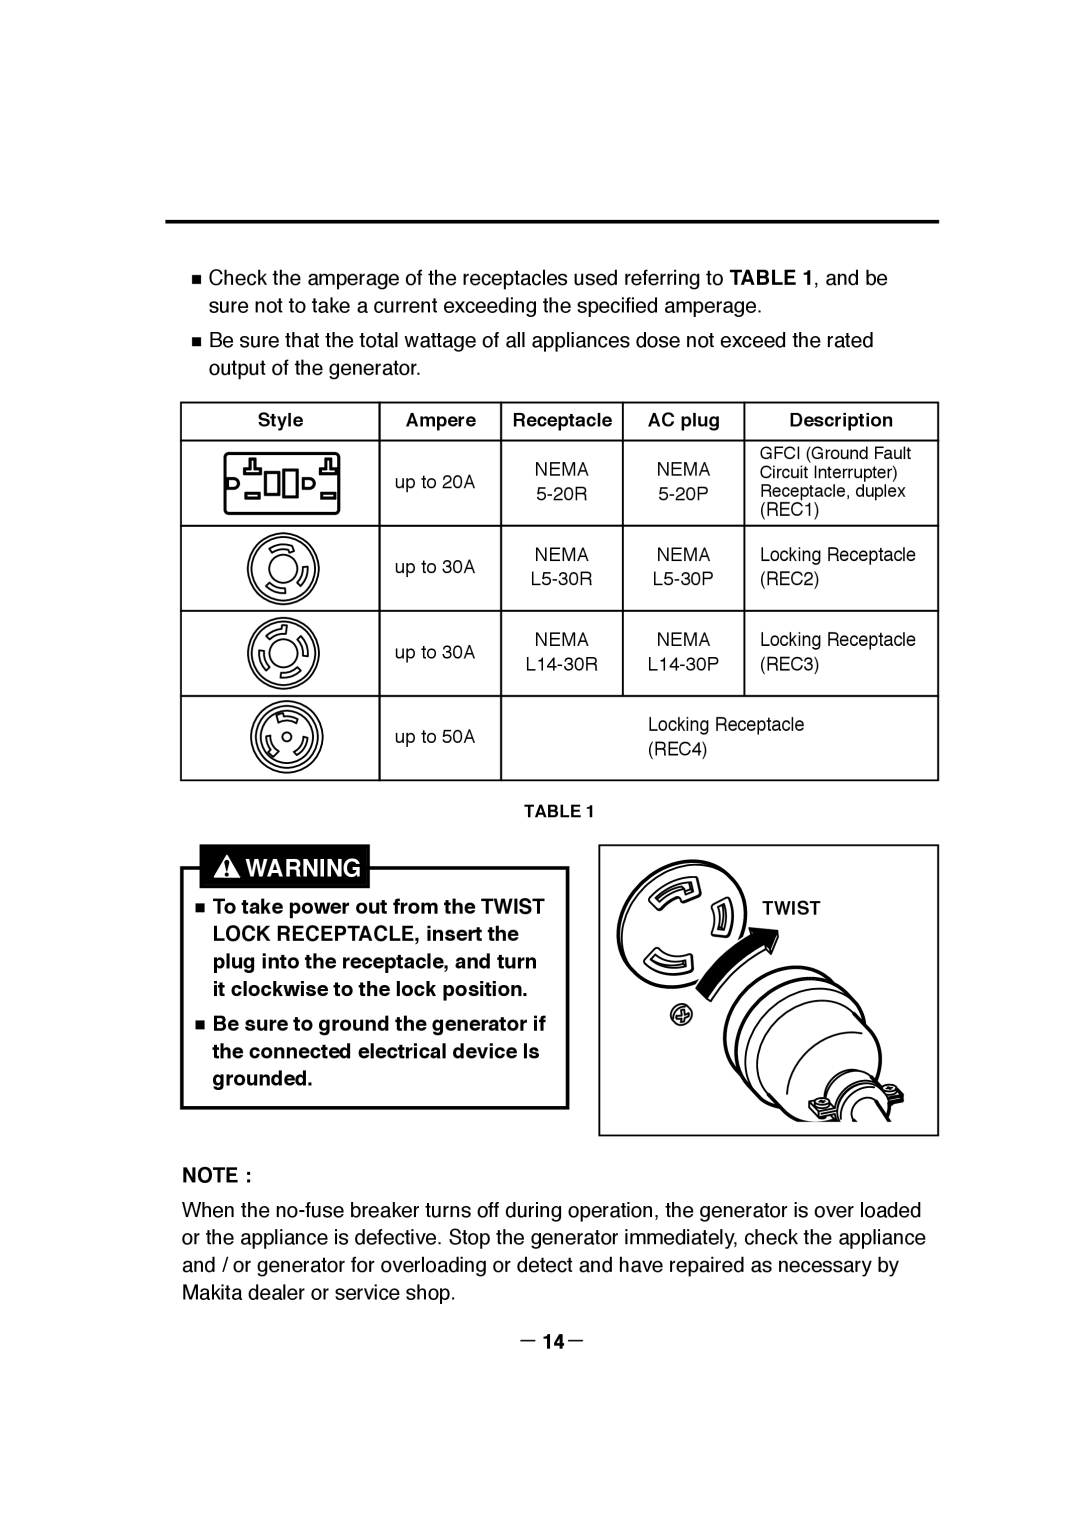 Makita G12010R manual － 14－, Style, Ampere Receptacle, AC plug, Description, Twist 